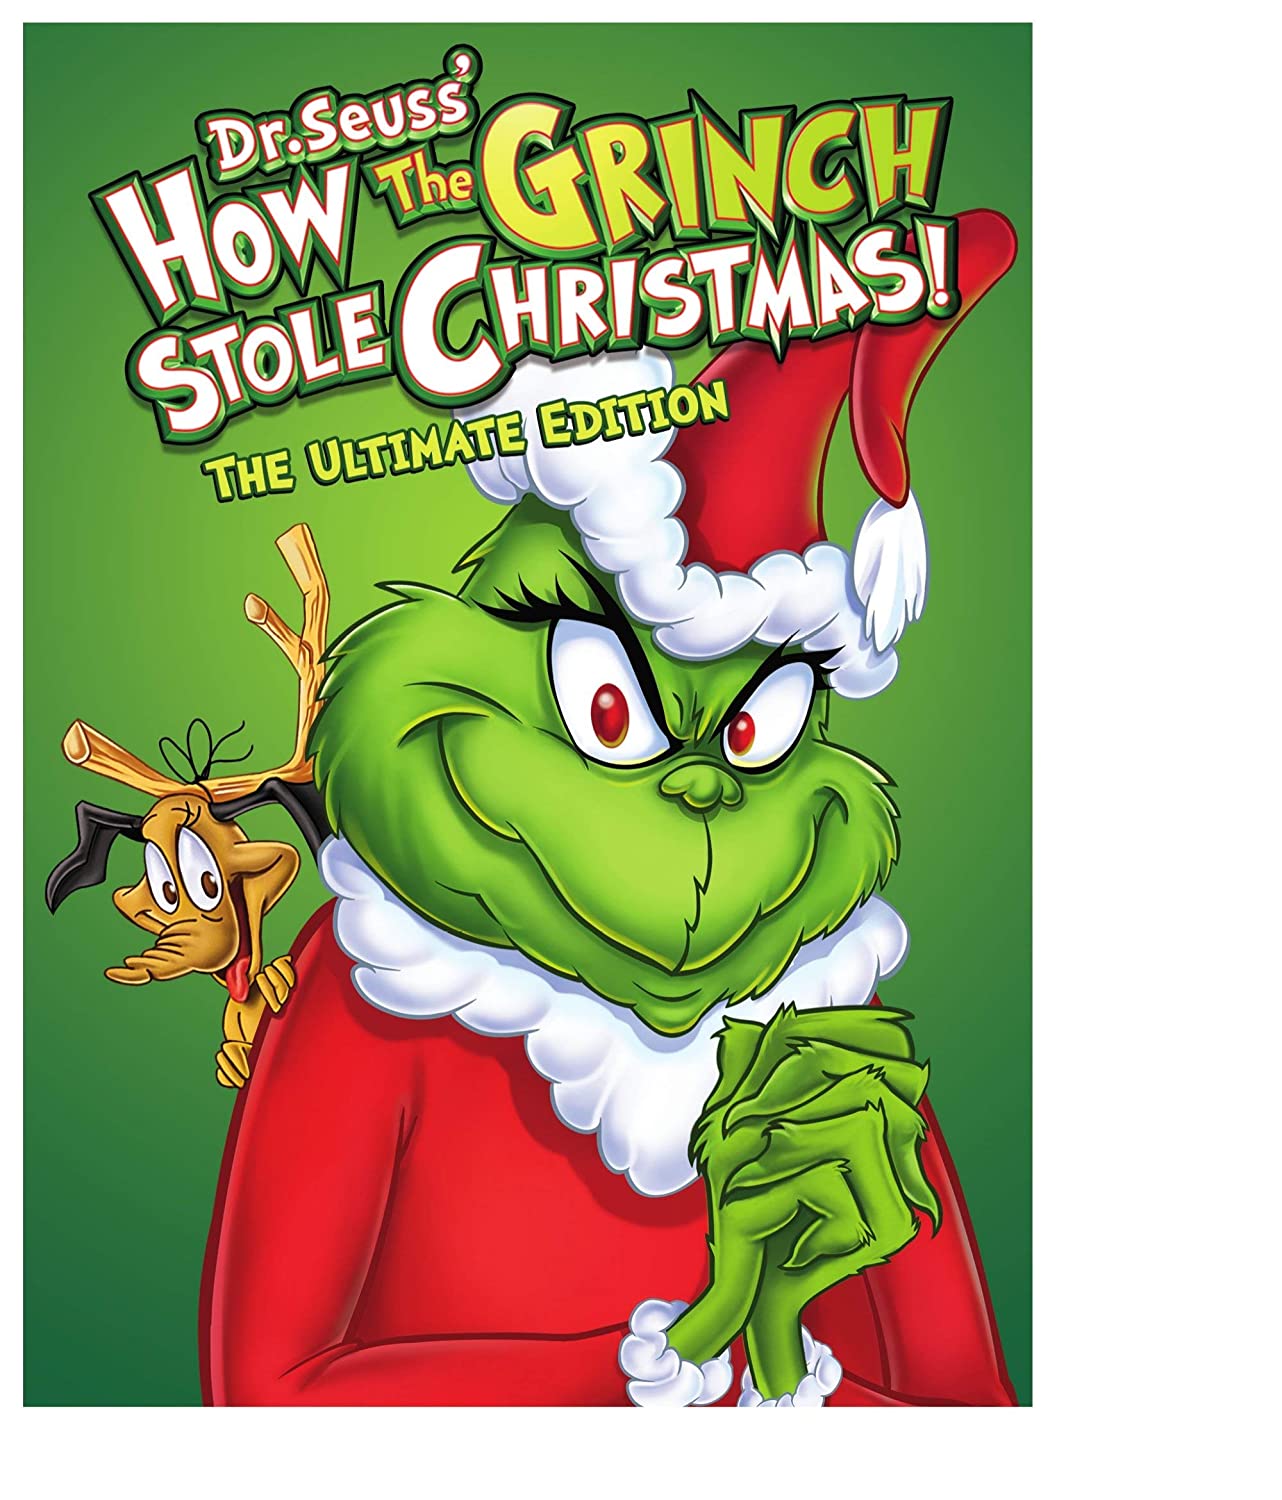 How the Grinch Stole Christmas (1966) starring Boris Karloff, Thurl Ravenscroft